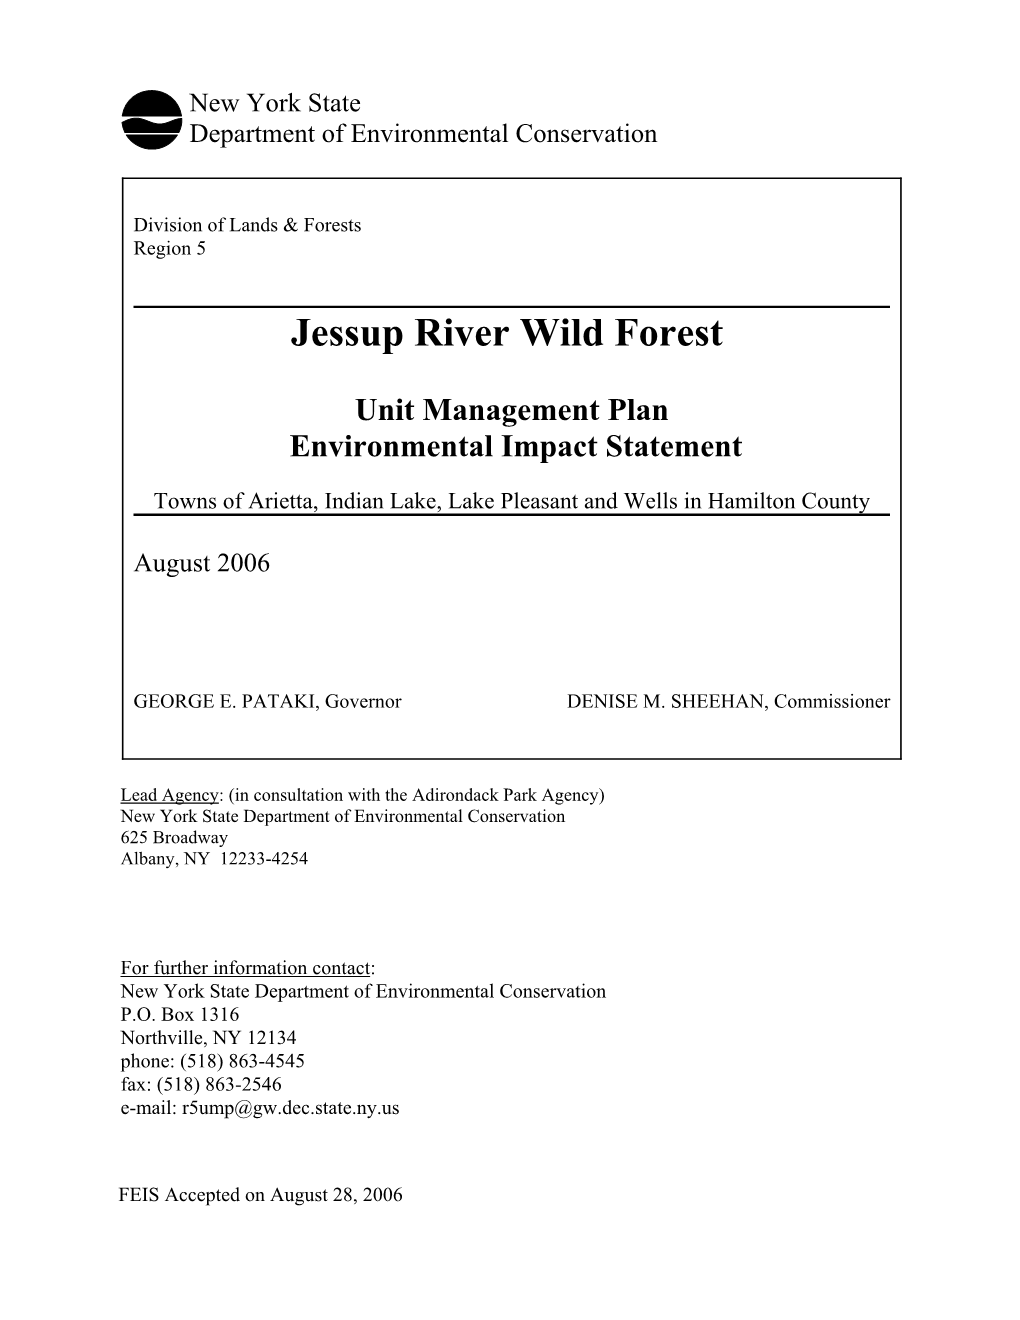 2006 Jessup River Wild Forest Unit Management Plan (UMP)